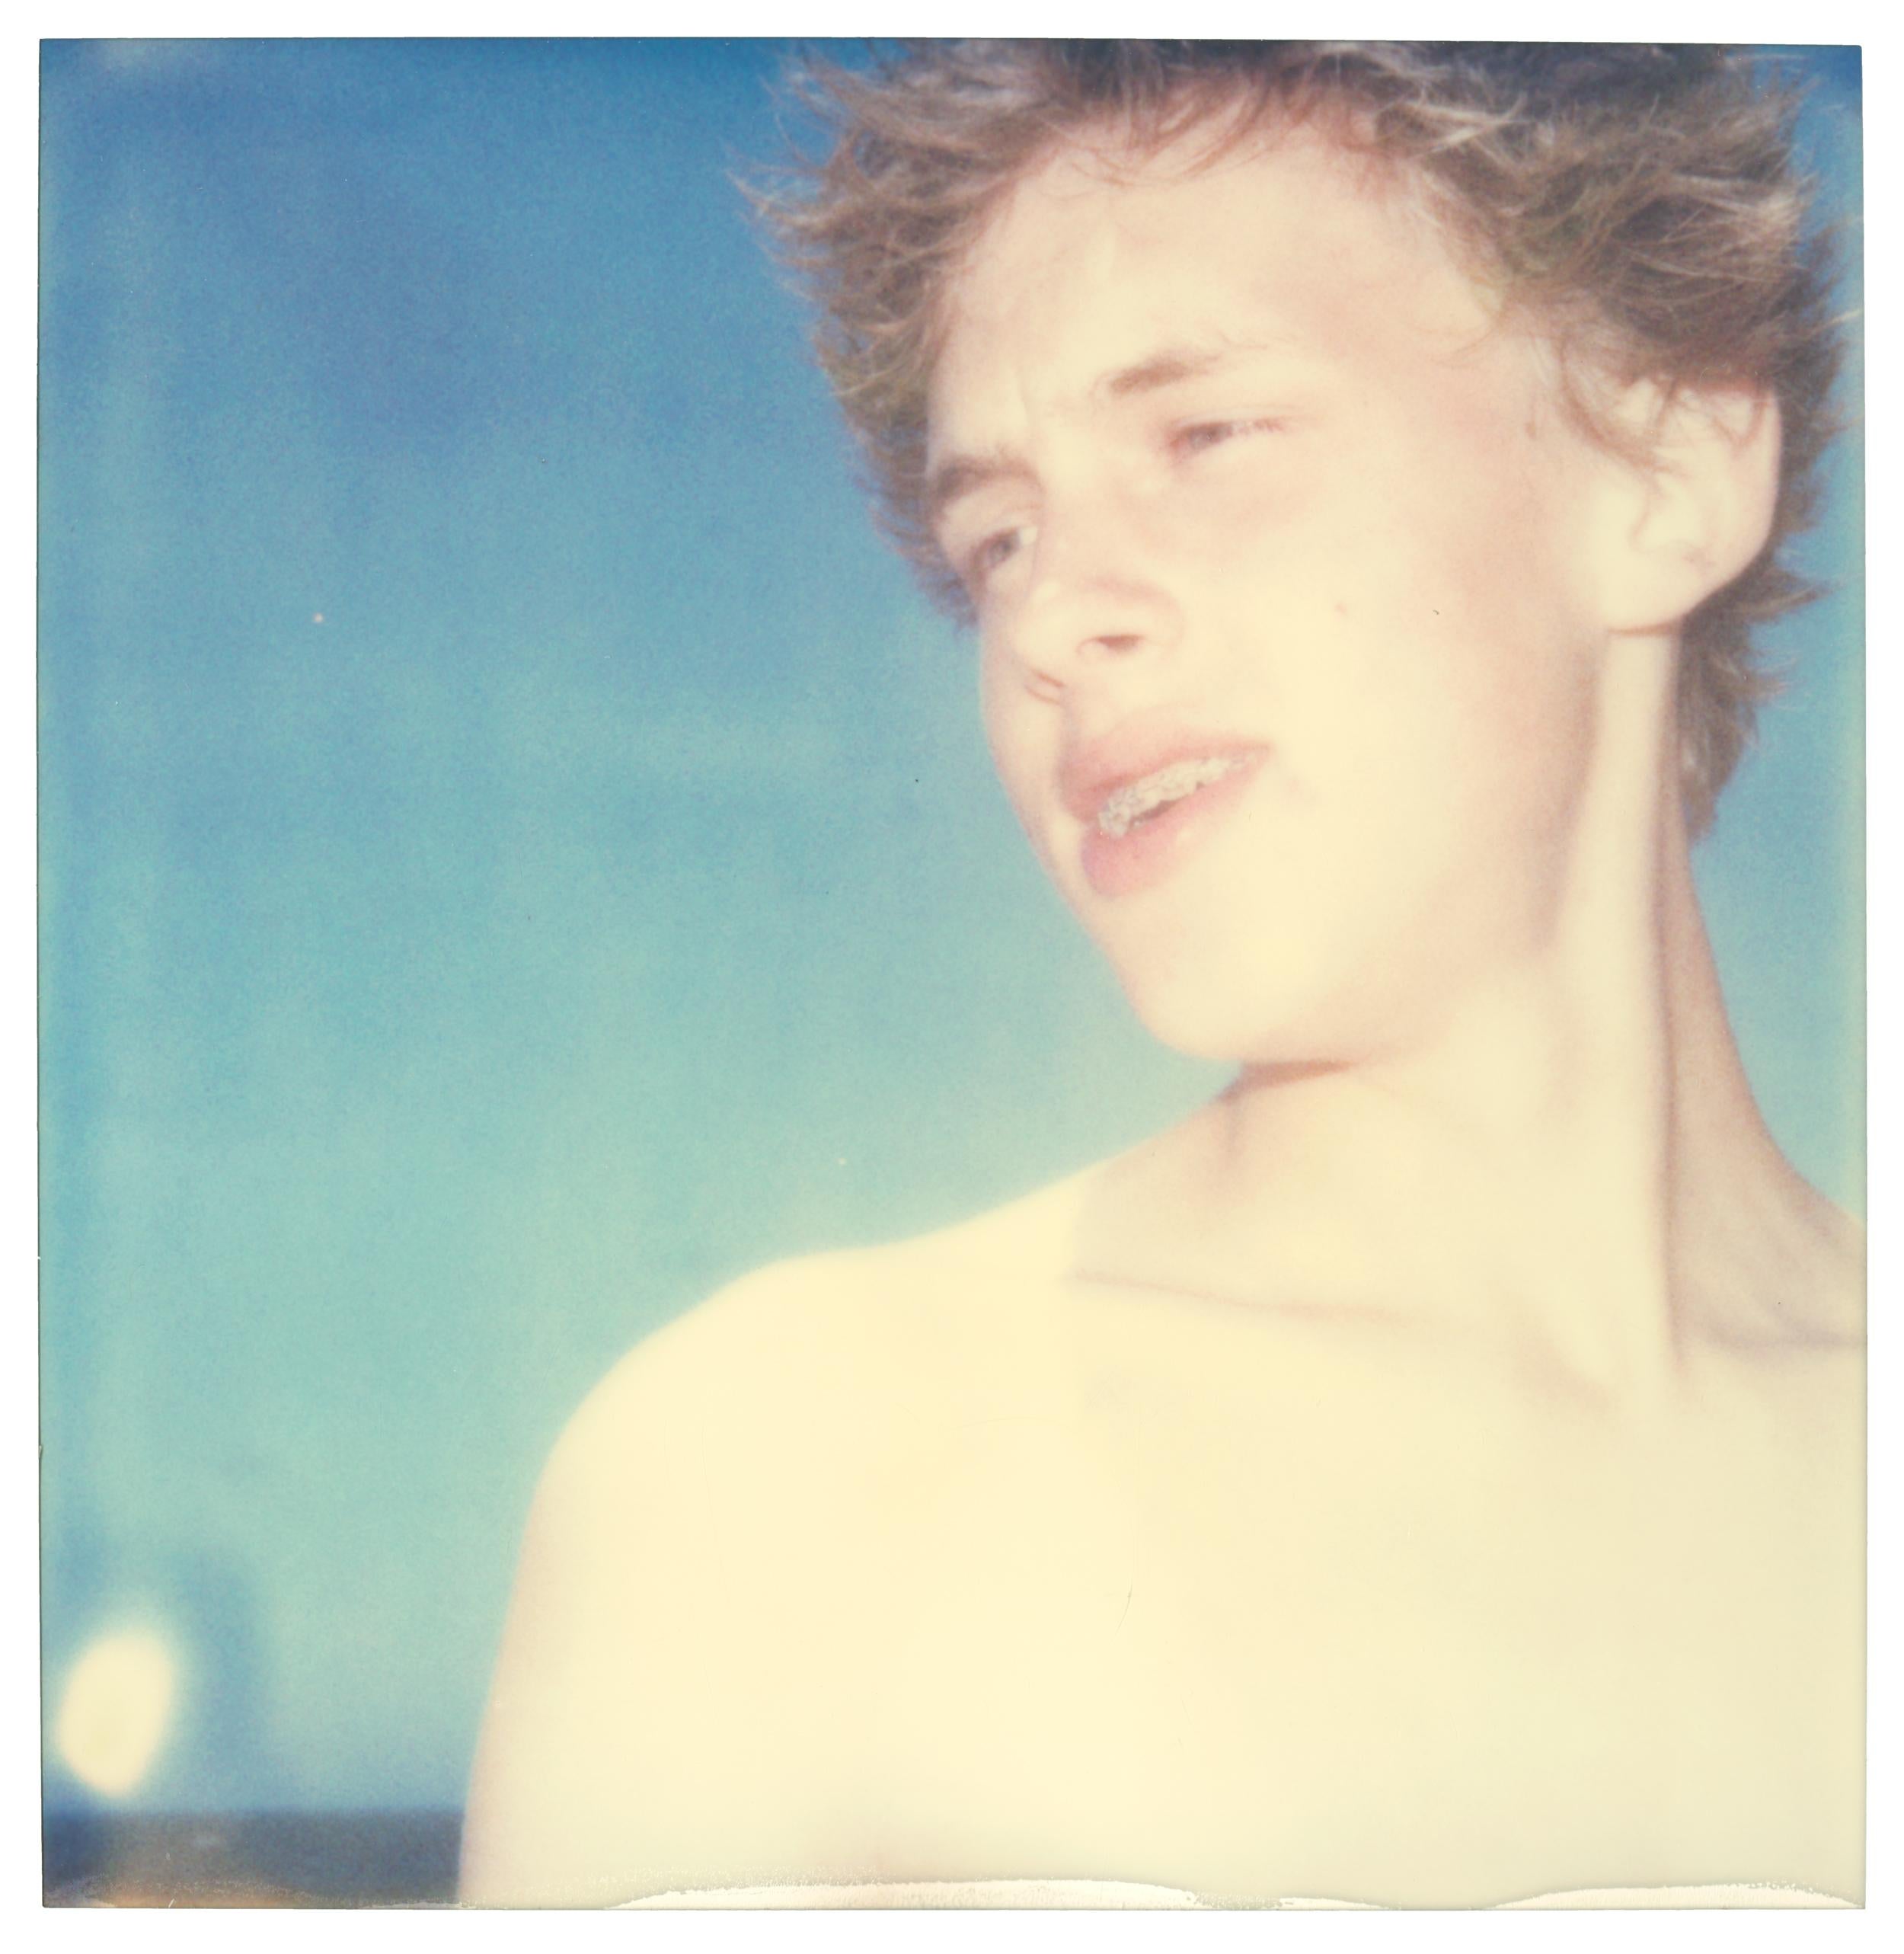 The Diva and the Boy (Beachshoot) - 9 pieces - Polaroid, Vintage, Contemporary 2